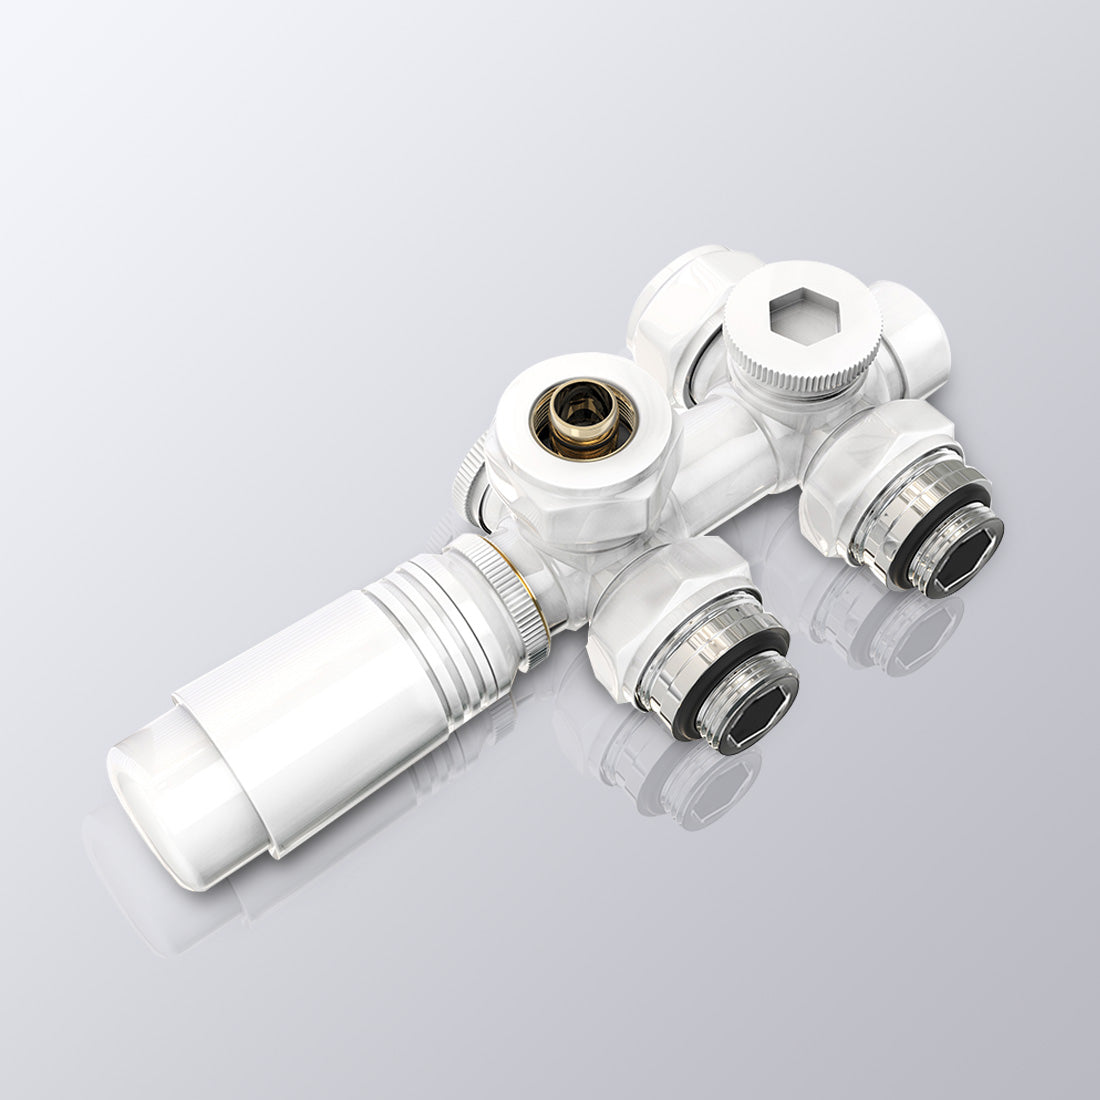 Kit robinet radiateur - Thermostatique - Design - Chrome - E..